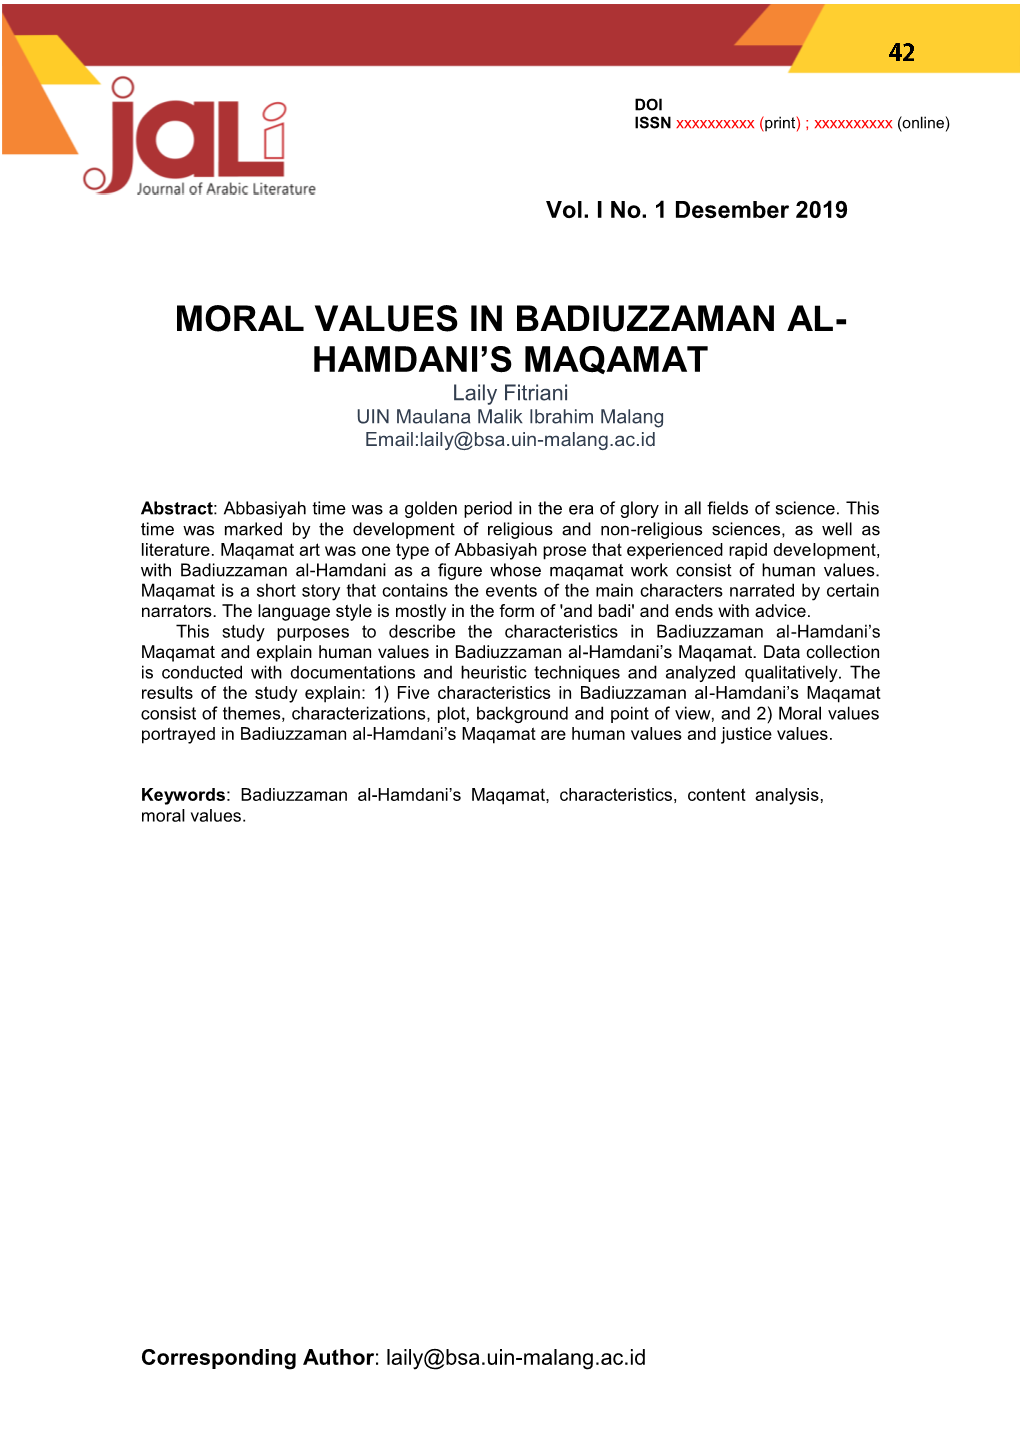 Moral Values in Badiuzzaman Al-Hamdani's Maqamat